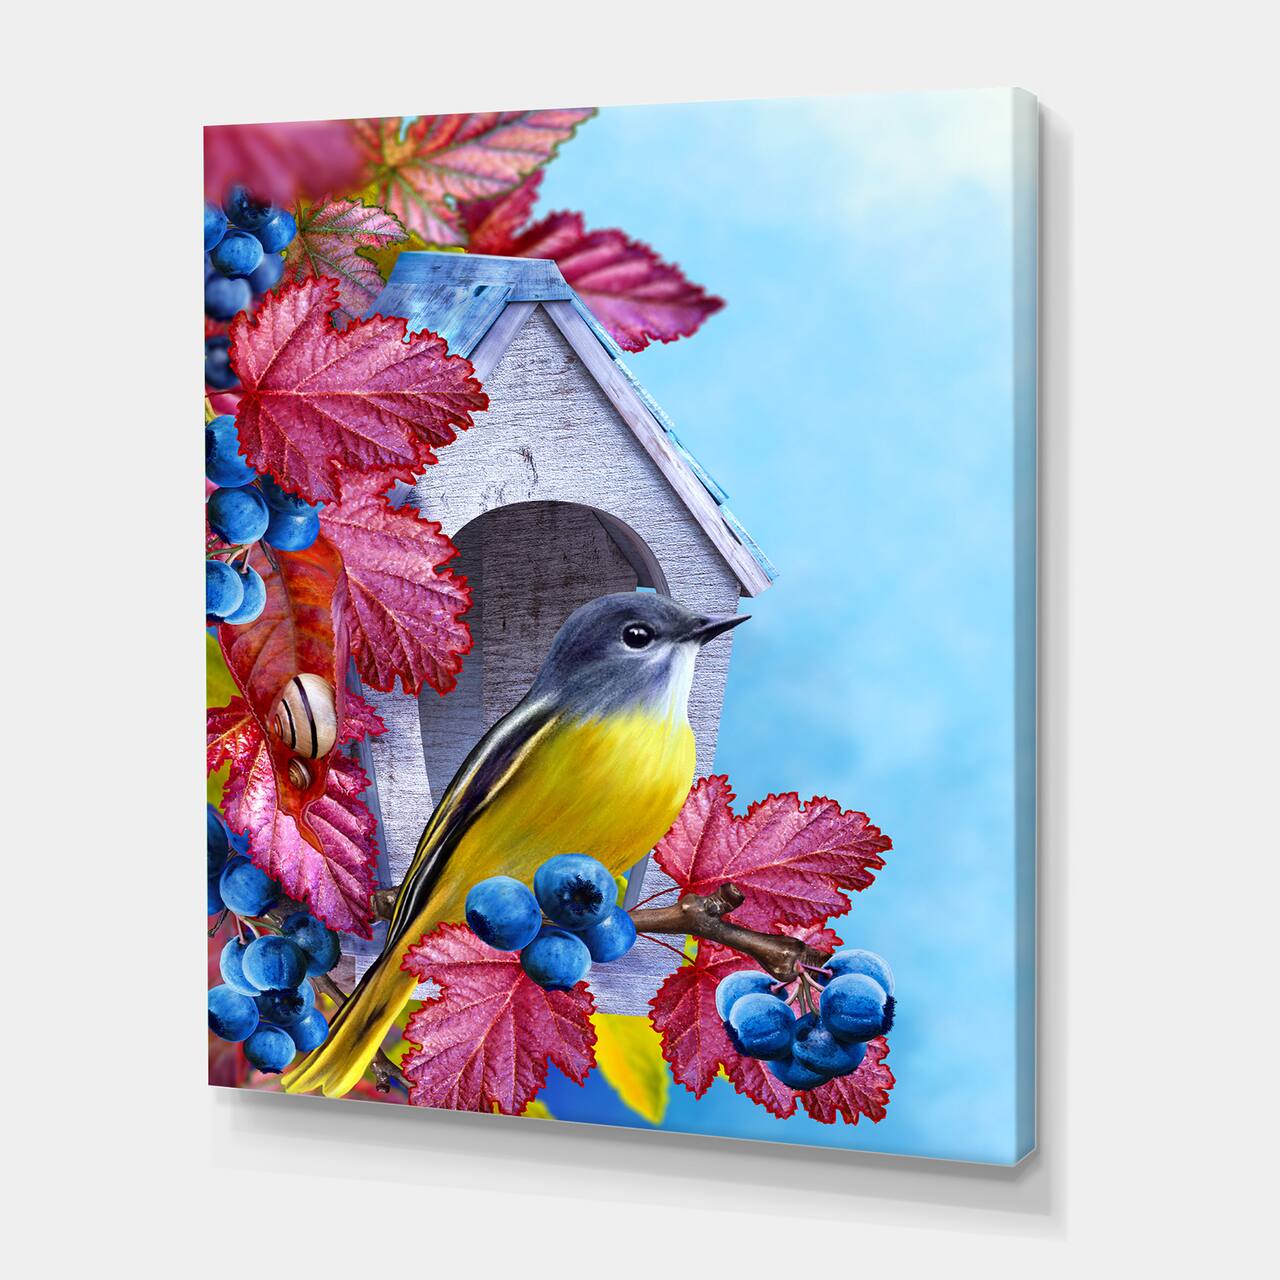 Designart - Titmouse Bird Sitting On A Branch Near A Birdhouse - Traditional Canvas Wall Art Print